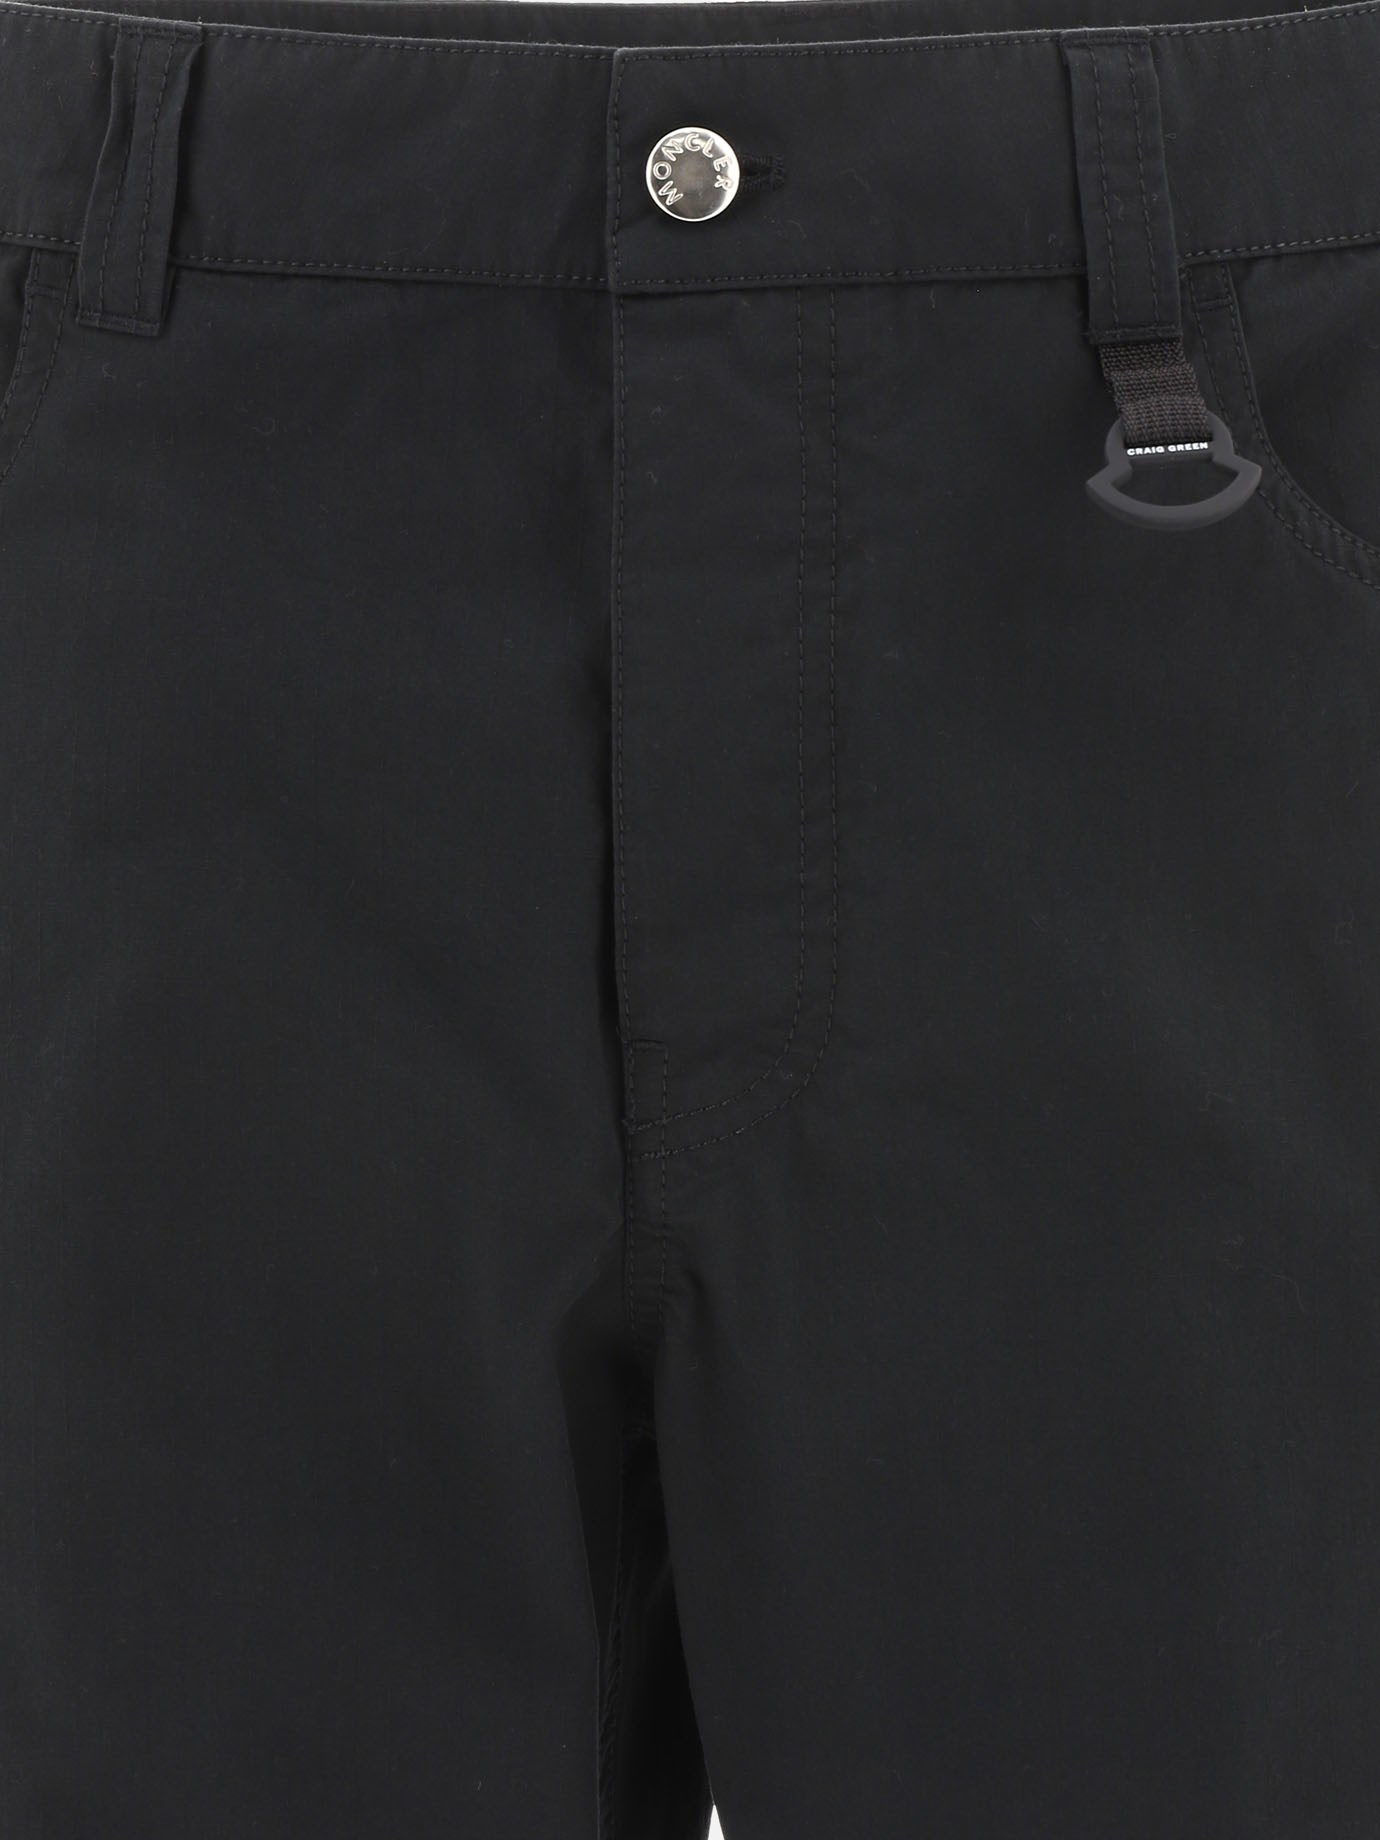 Pantaloni  Craig Green  by Moncler Genius